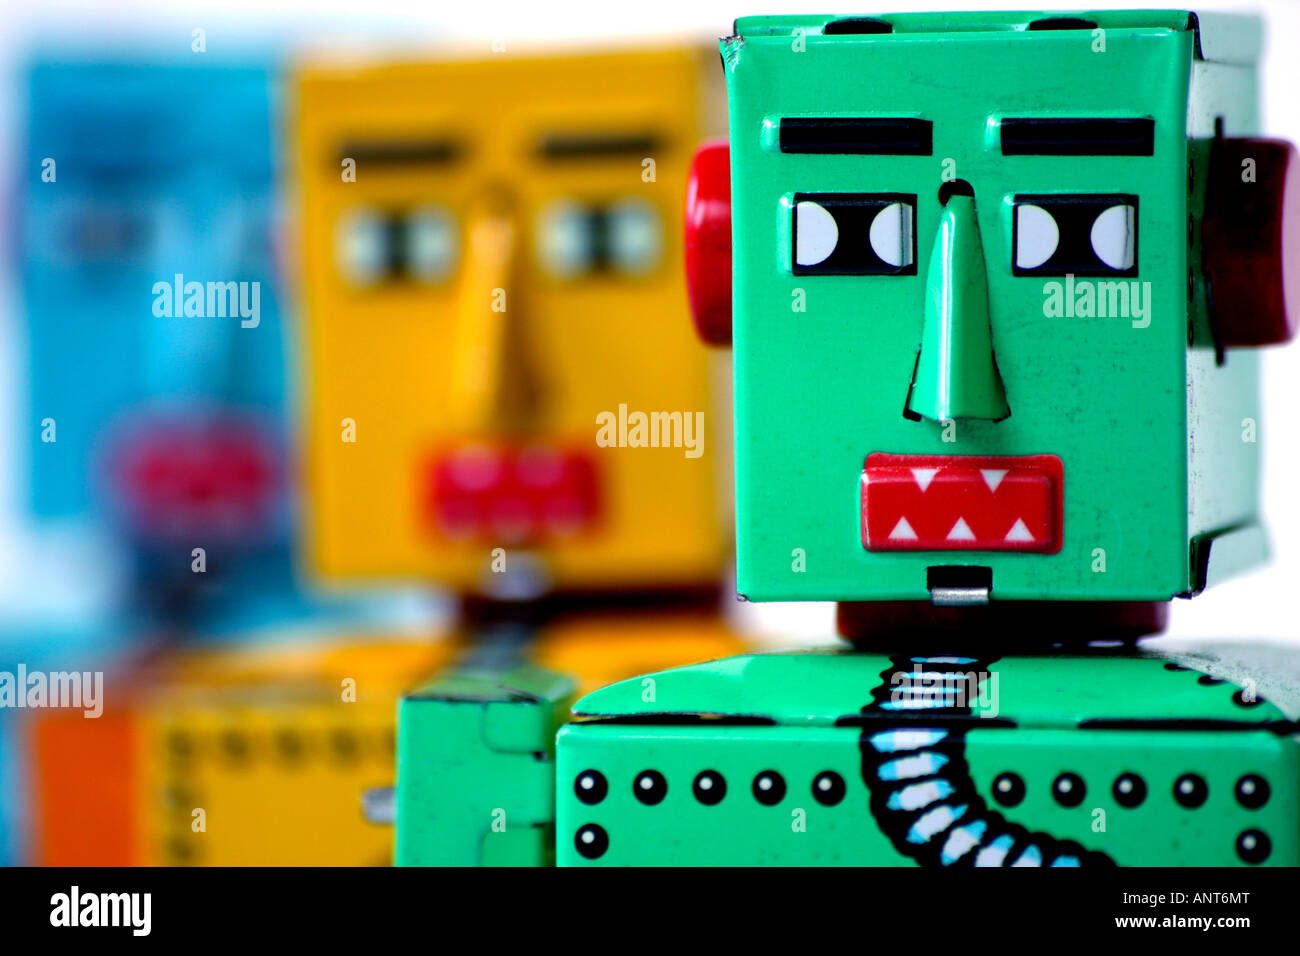 3 Chinese manufactured tinplate clockwork toy robots Stock Photo